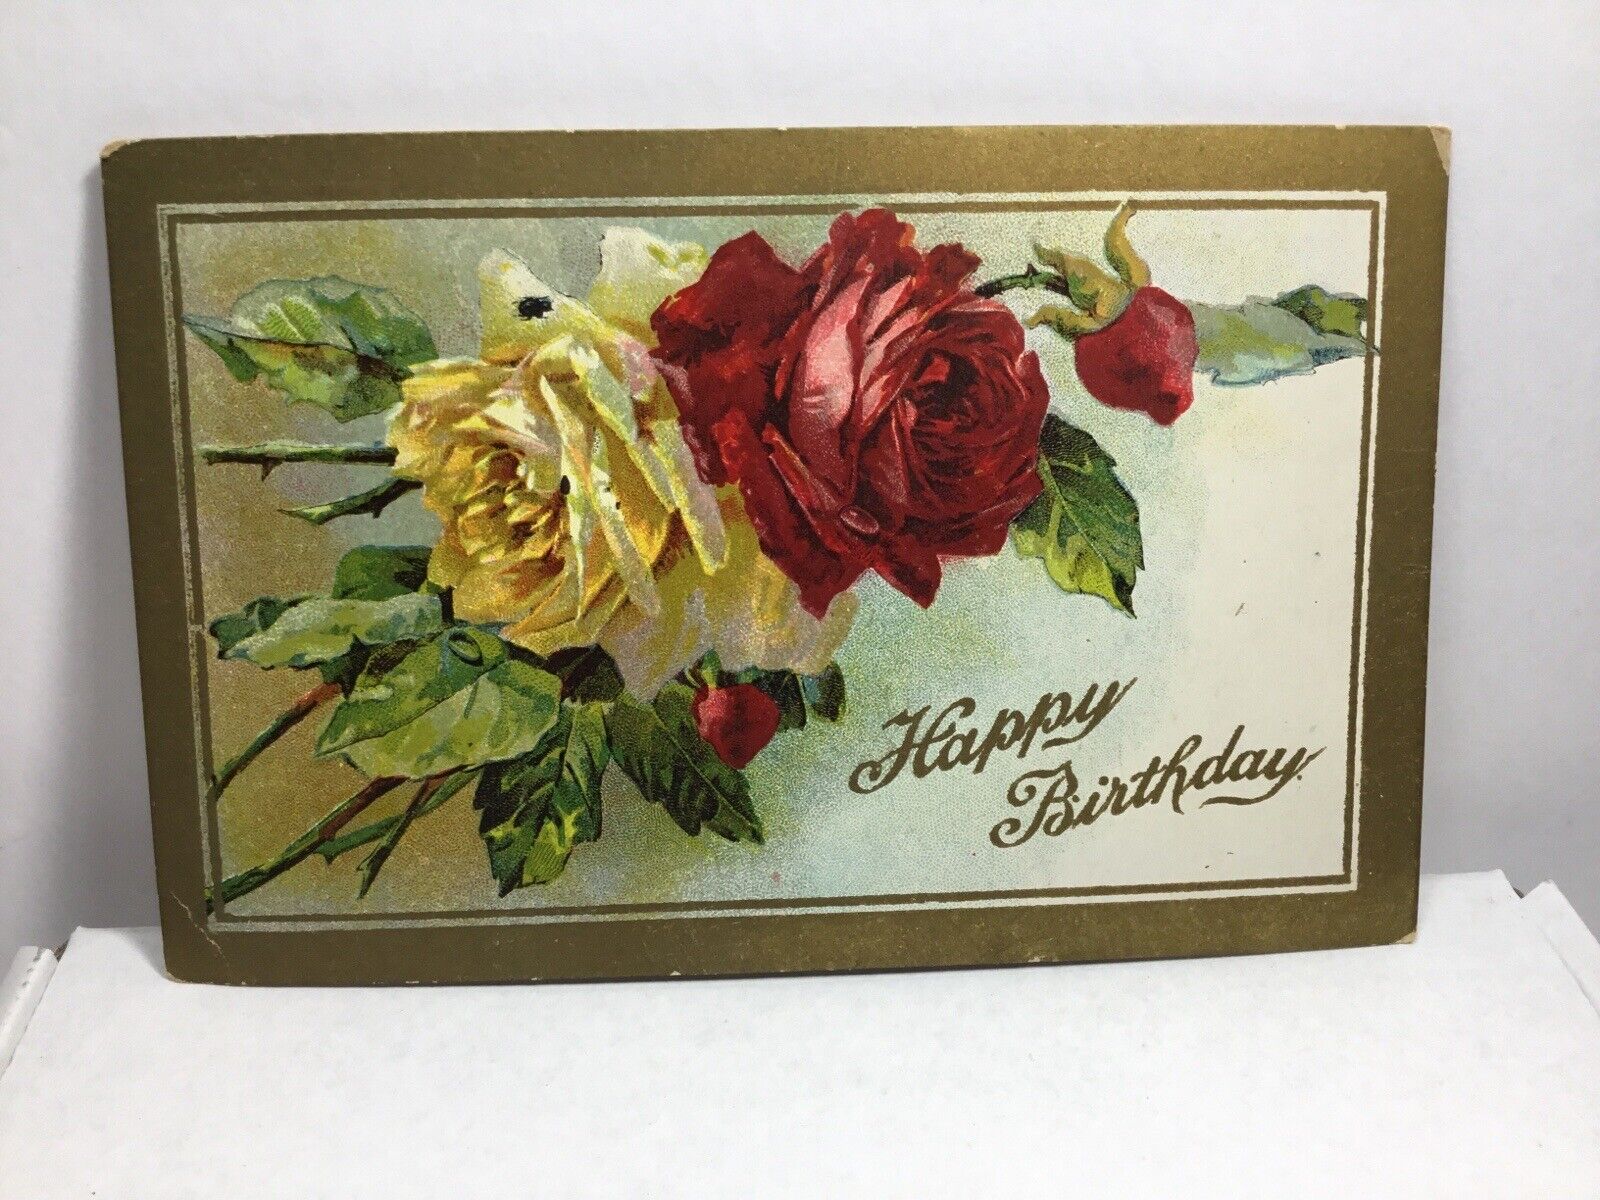 Vintage 1908 Happy Birthday Postcard With Roses.